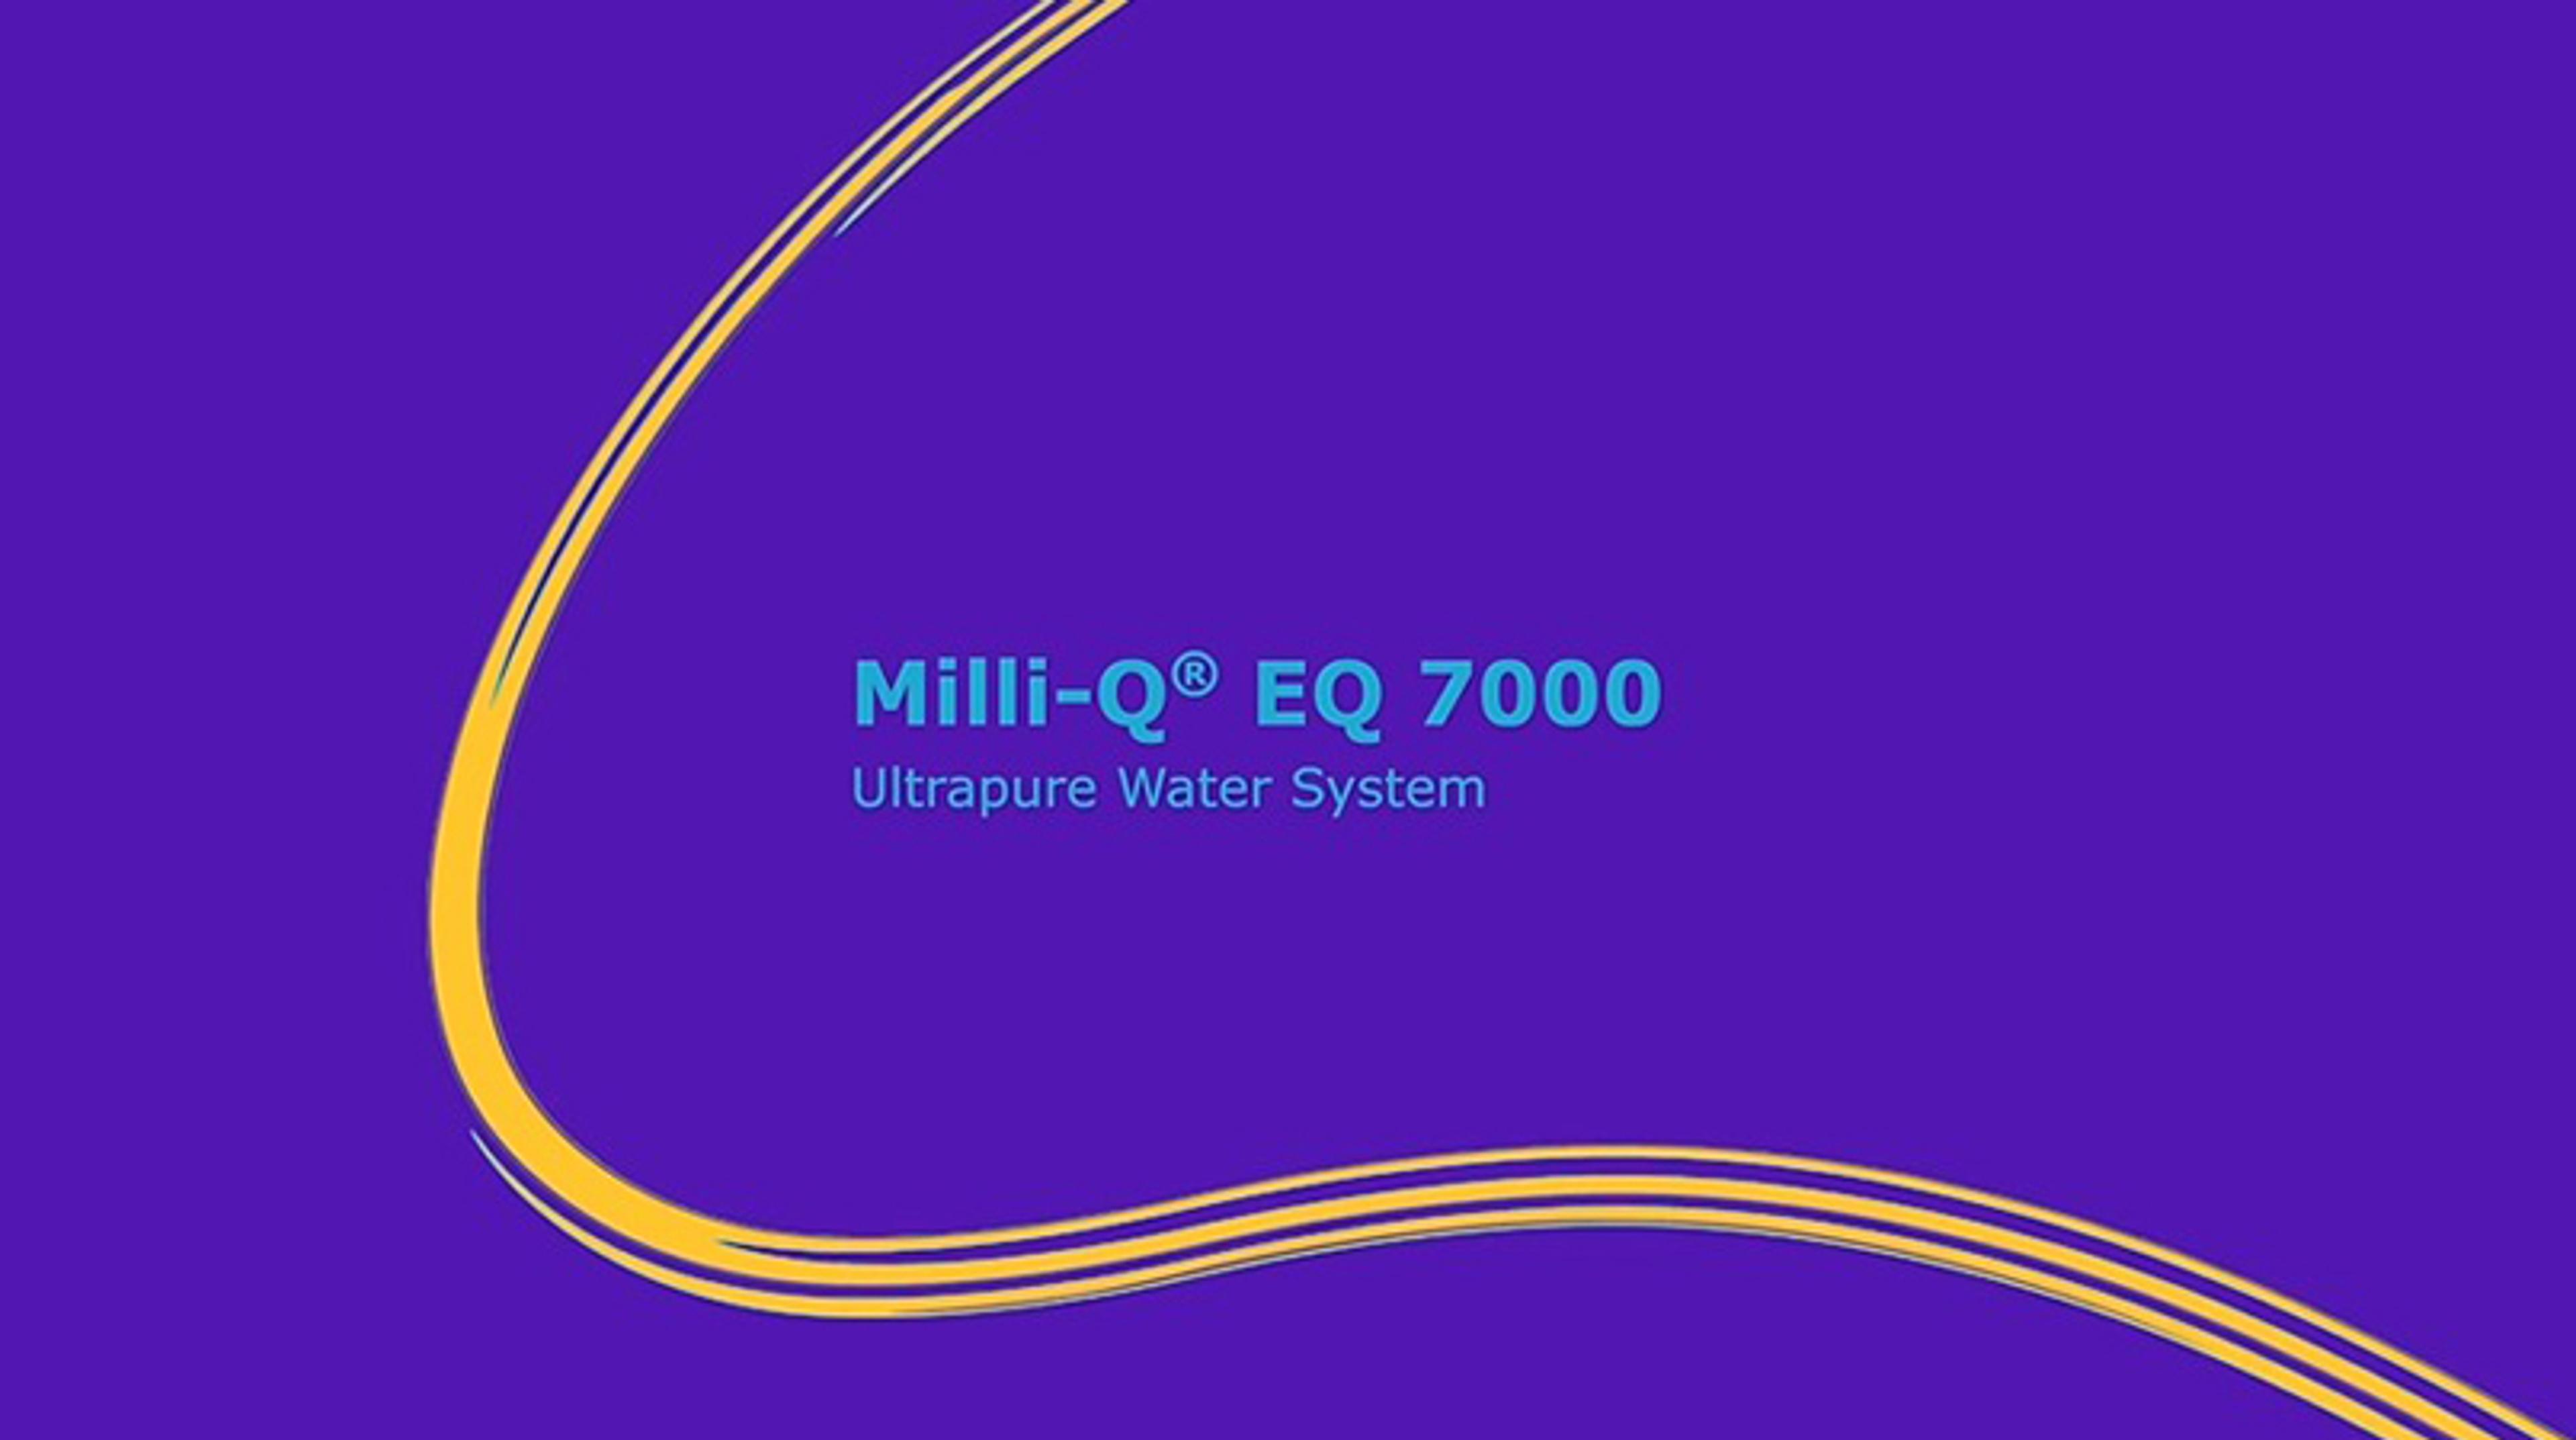 Merck introduces the Milli-Q EQ 7000 Ultrapure Water System